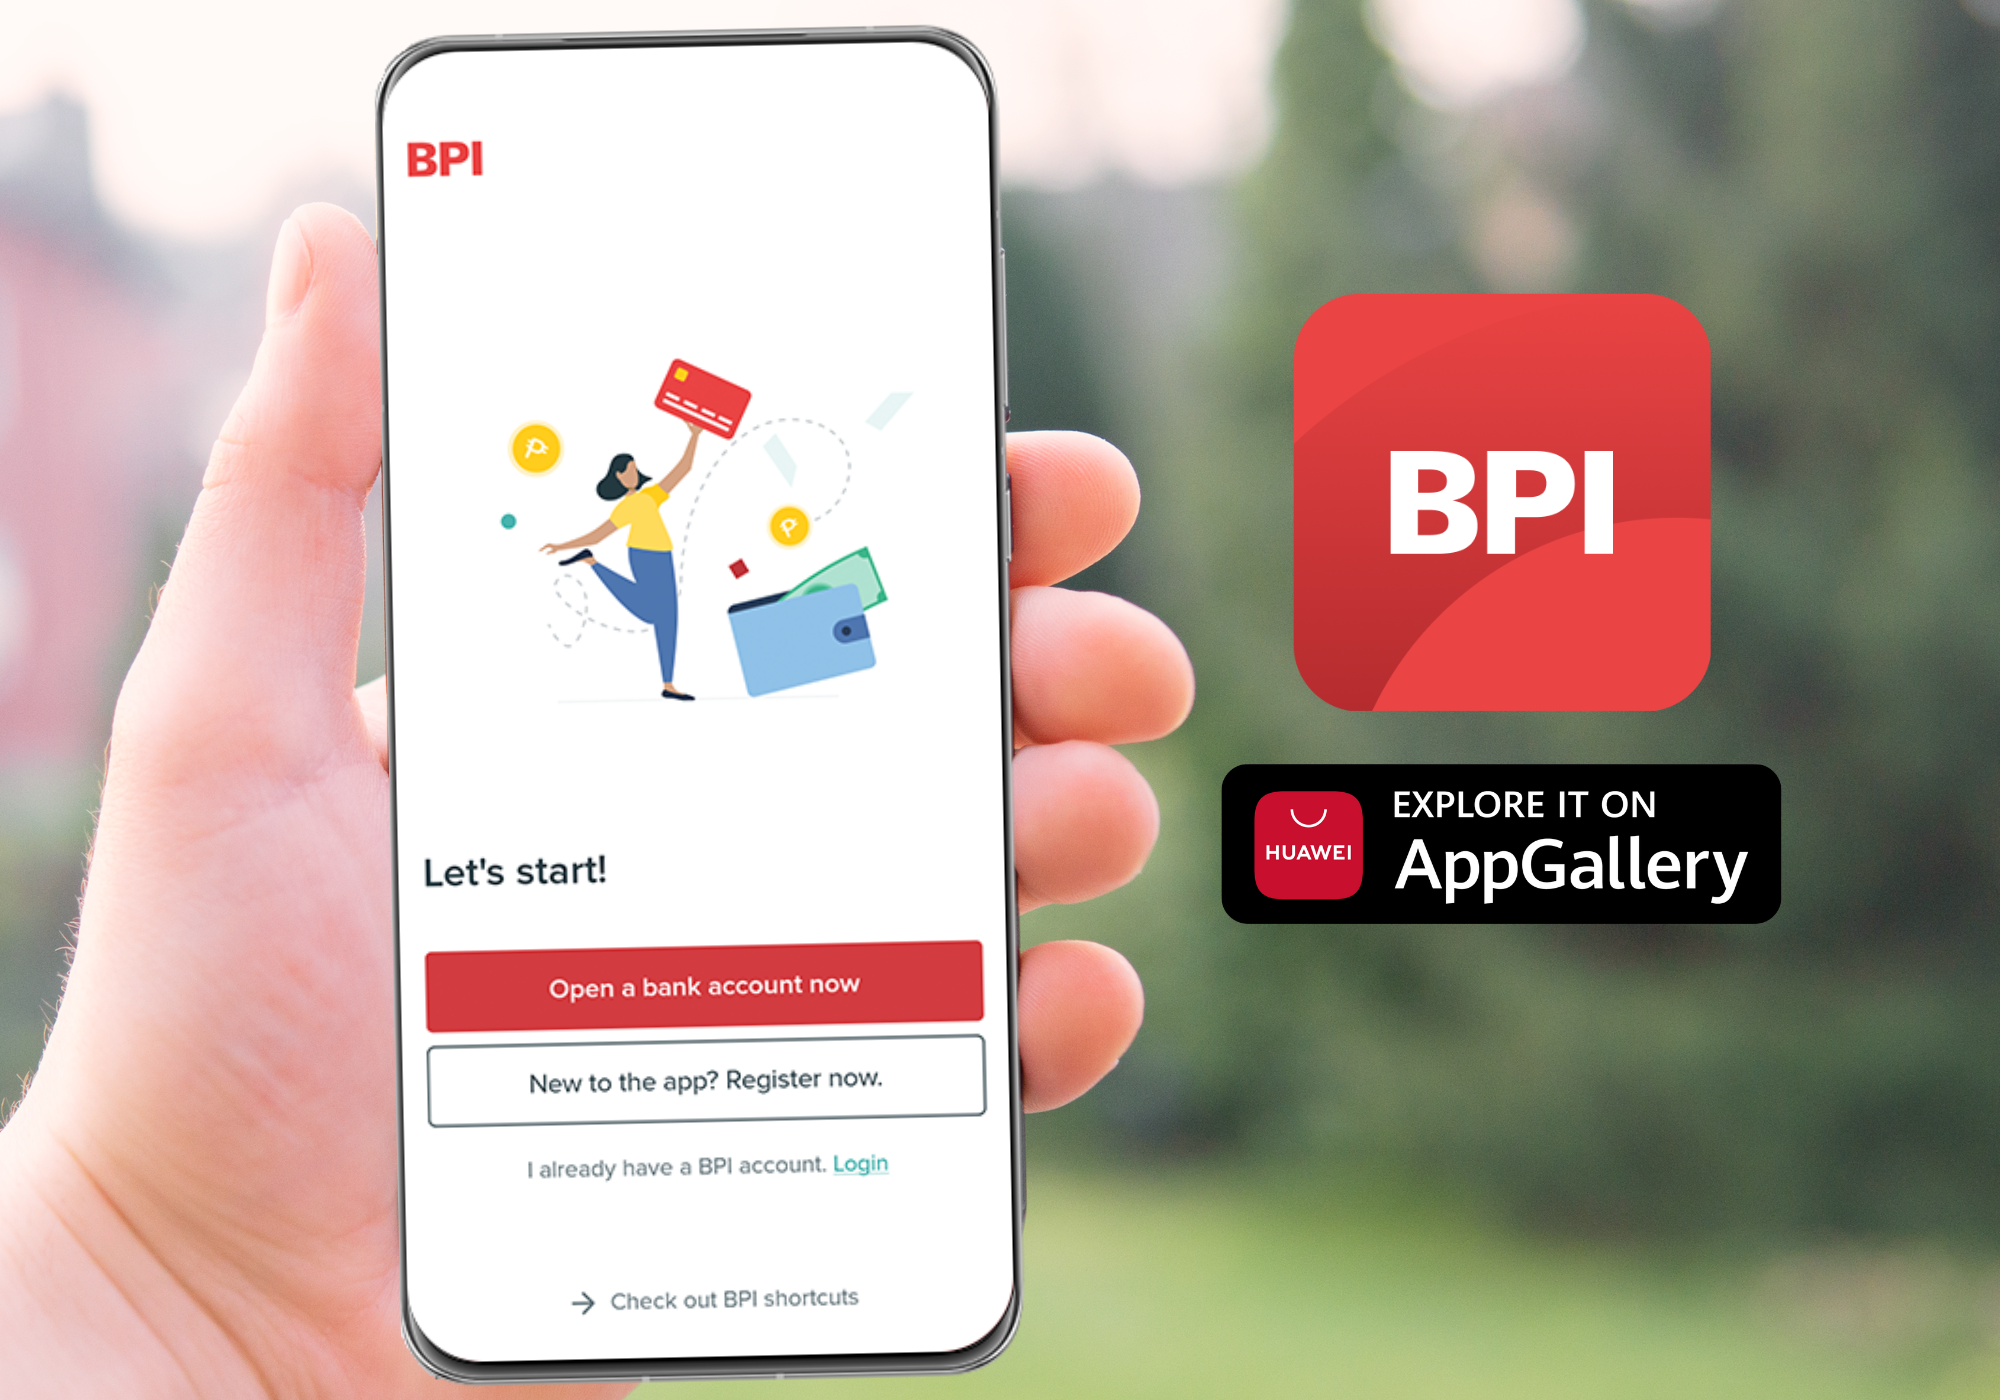 BPI app debuts on Huawei 